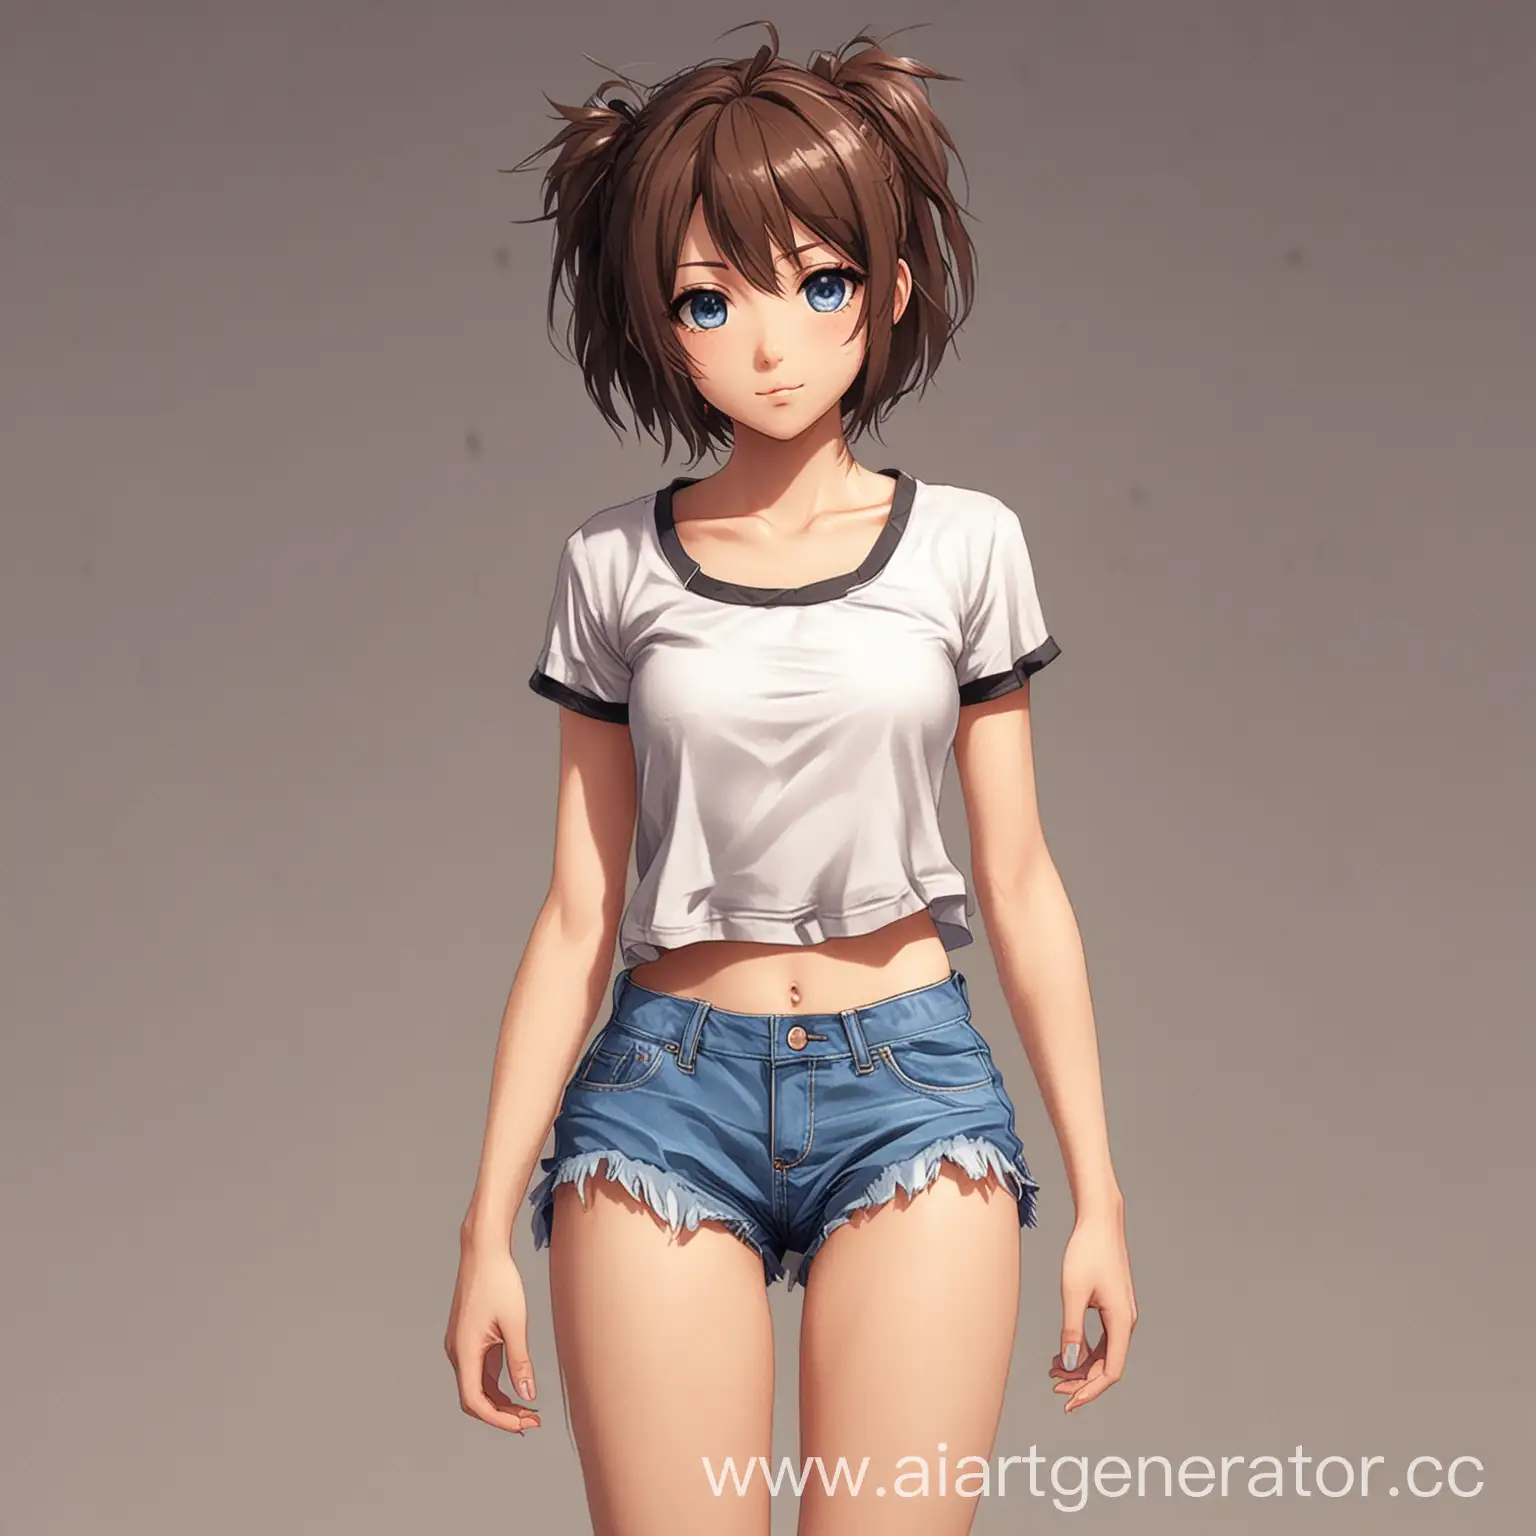 Colorful-Anime-Girl-in-Stylish-Short-Shorts